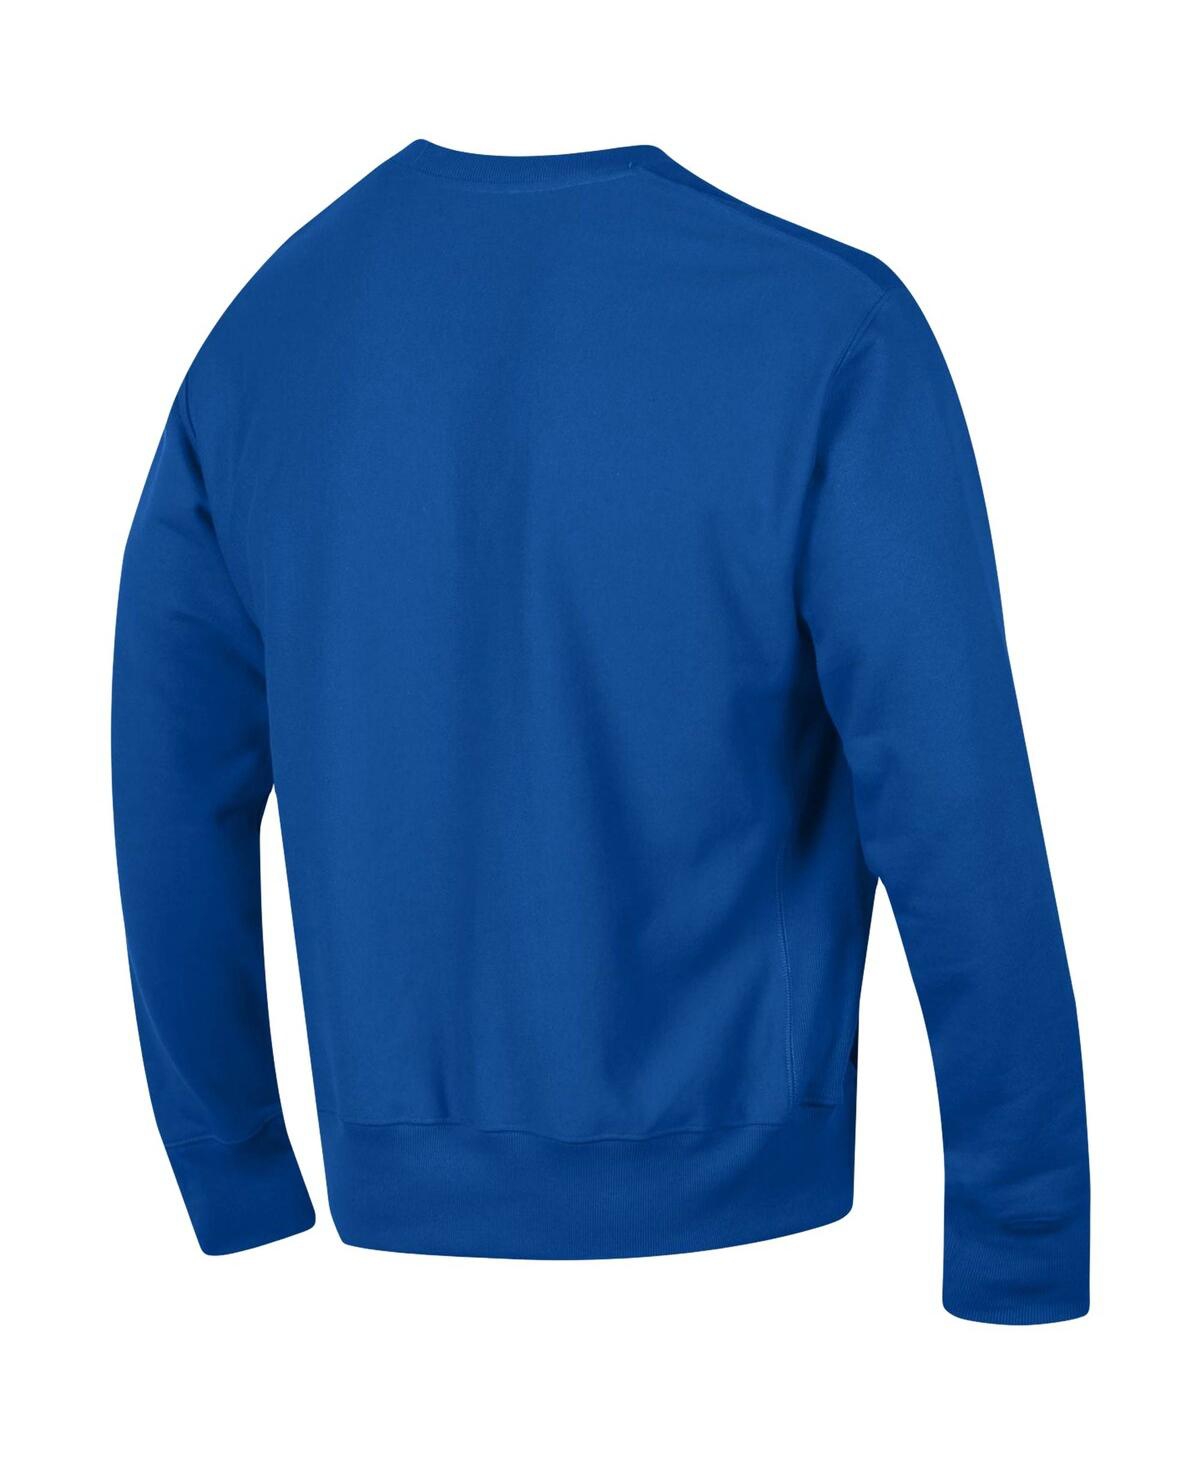 Shop Champion Men's  Royal Kansas Jayhawks Arch Reverse Weave Pullover Sweatshirt